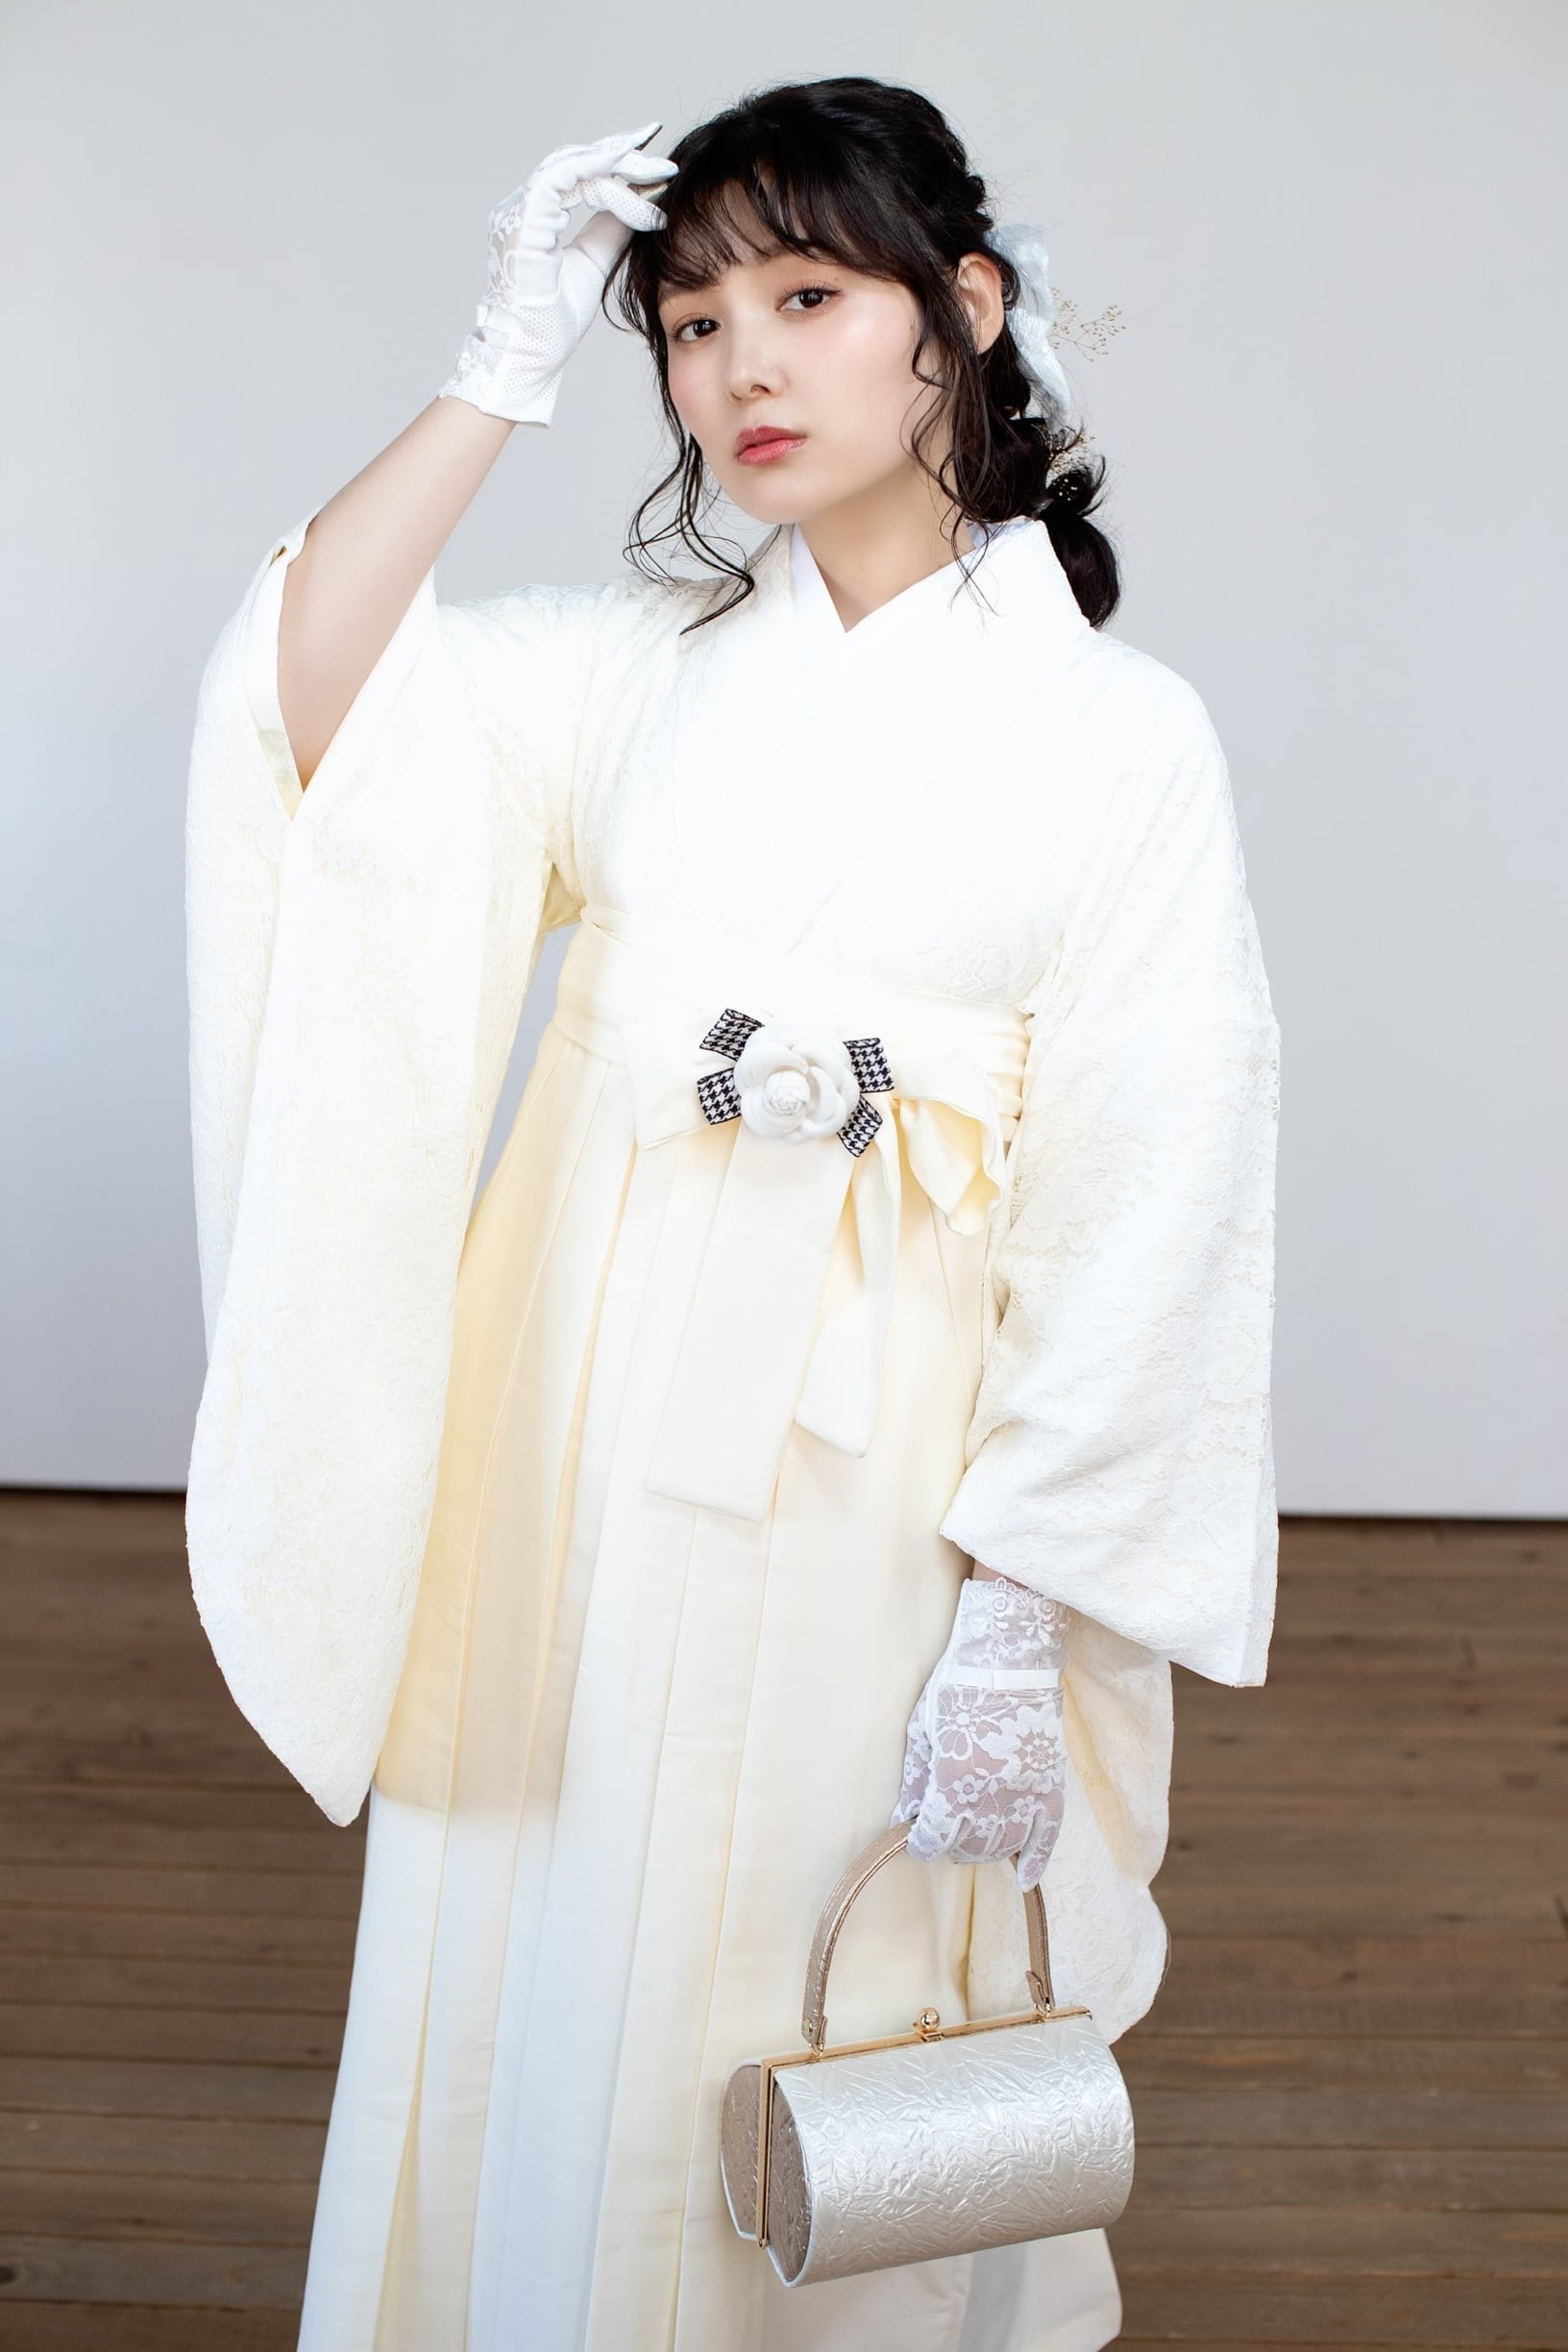 Kimono Sienne 卒業式袴 3点セット レース二尺袖 袴 卒業式 白レース ...